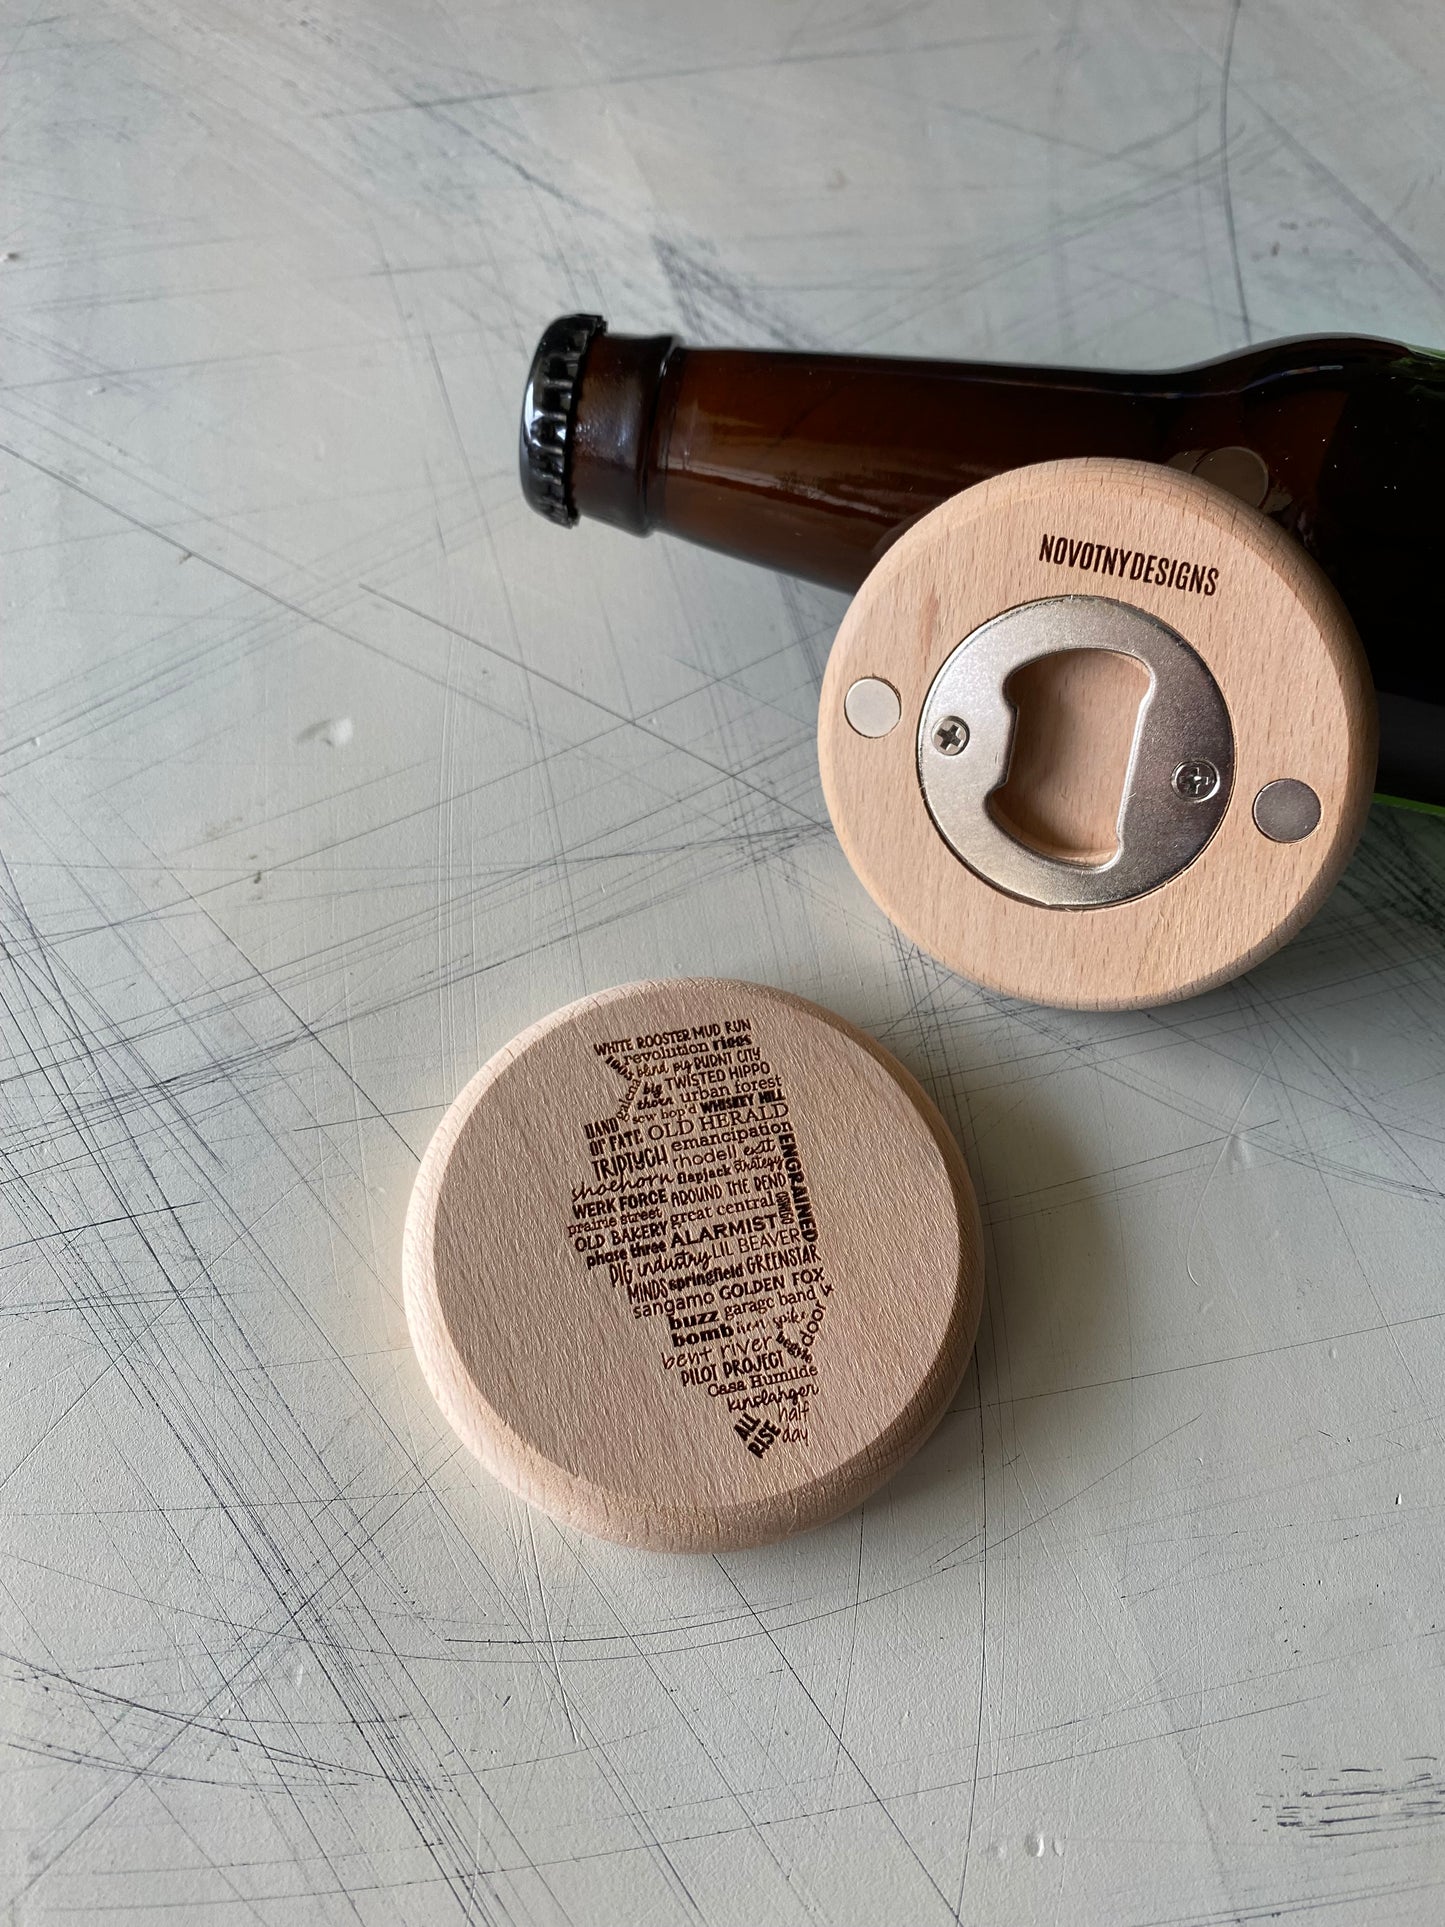 Illinois craft breweries magnetic engraved wood bottle opener - Novotny Designs